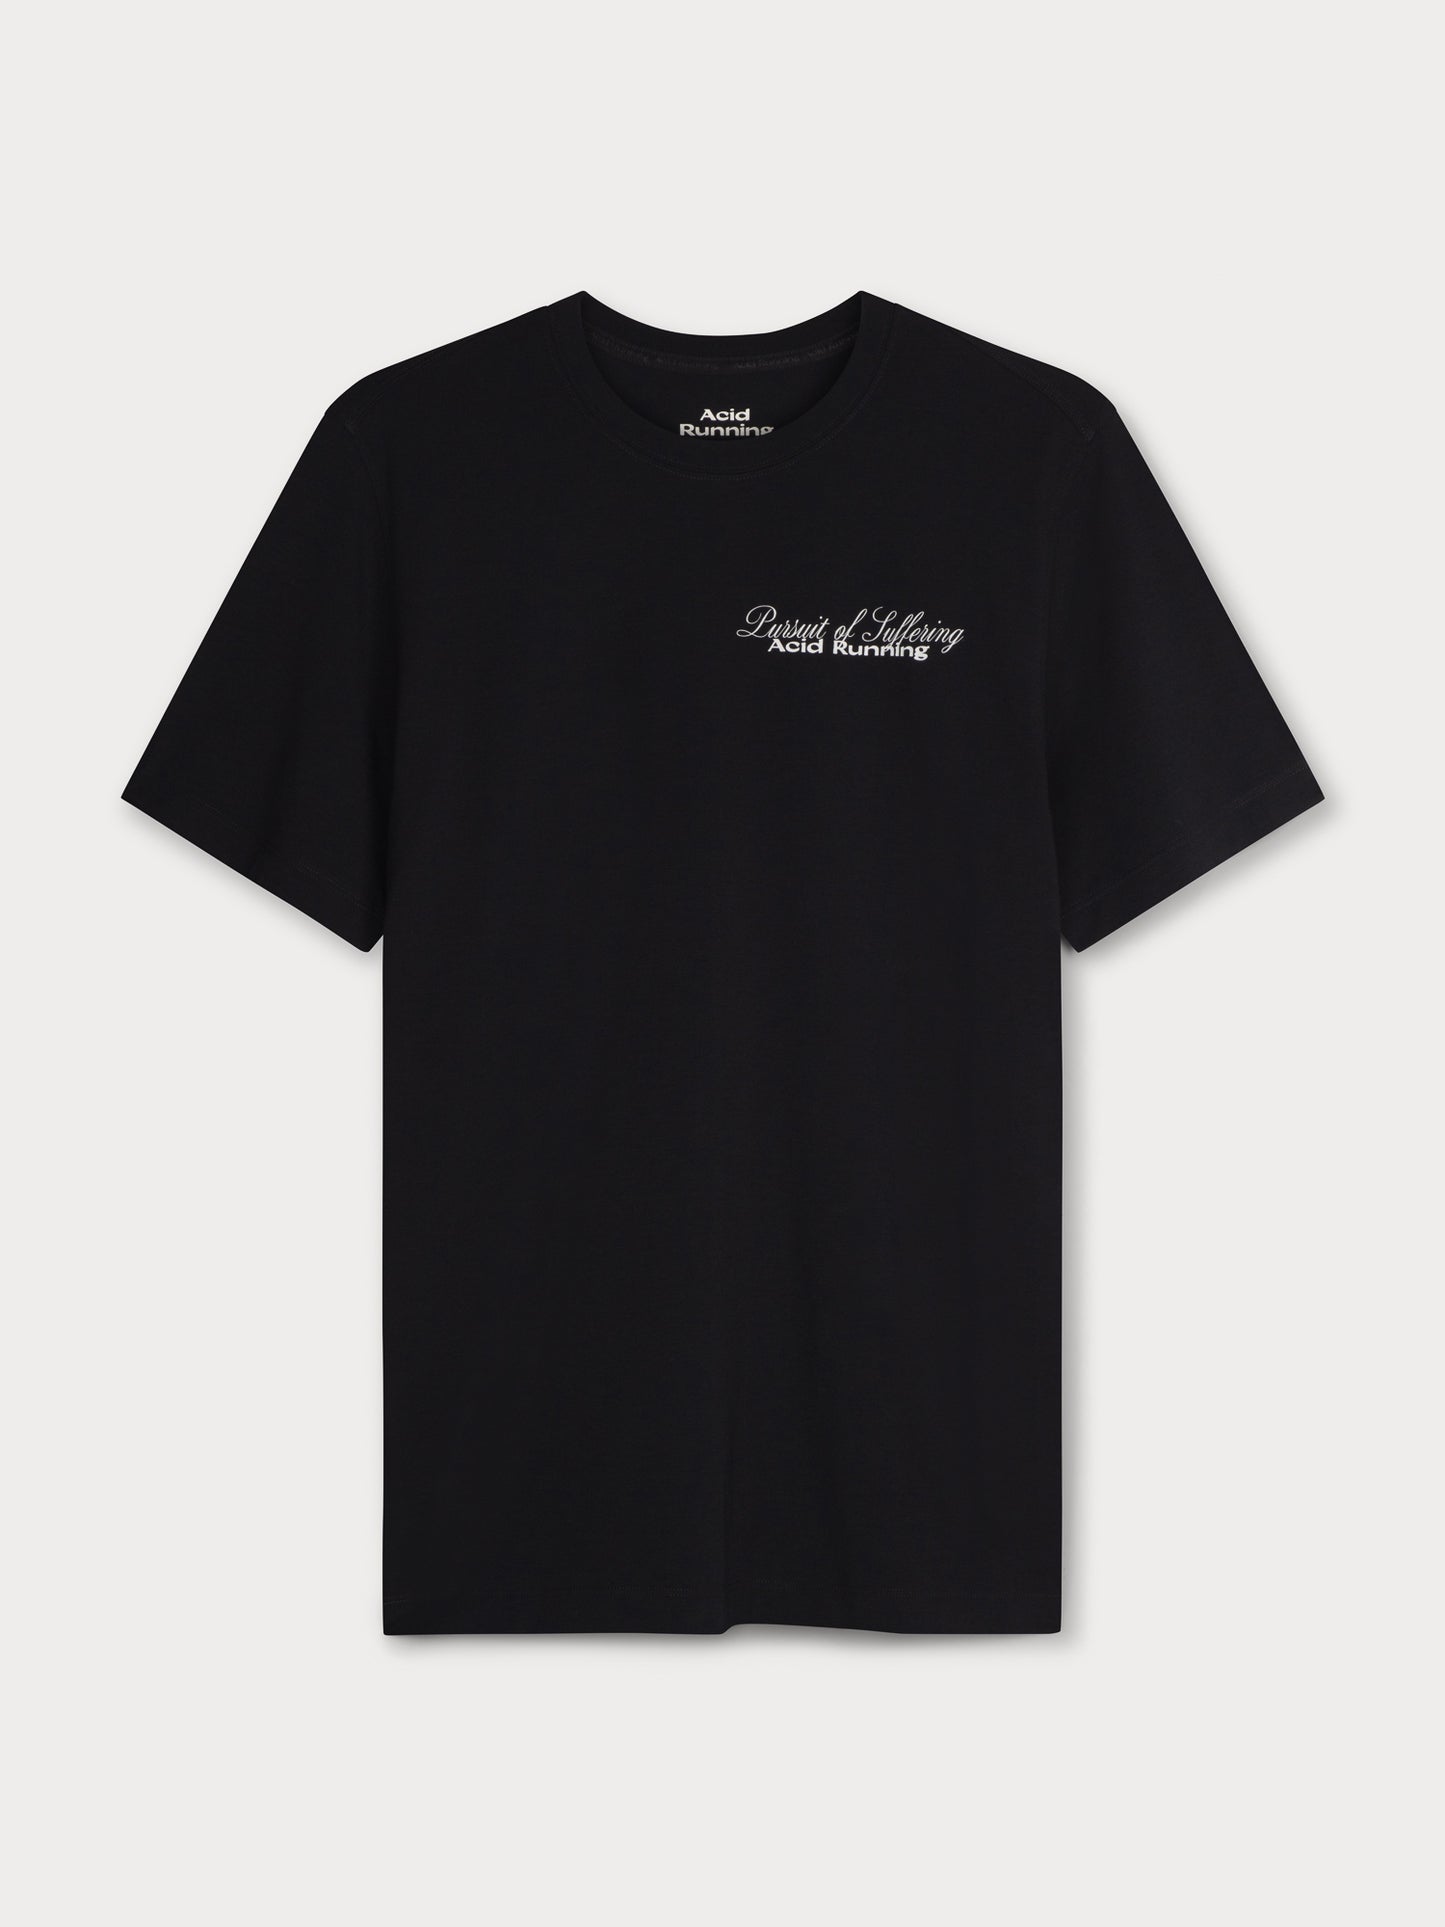 Runner's Fate T-Shirt - Black